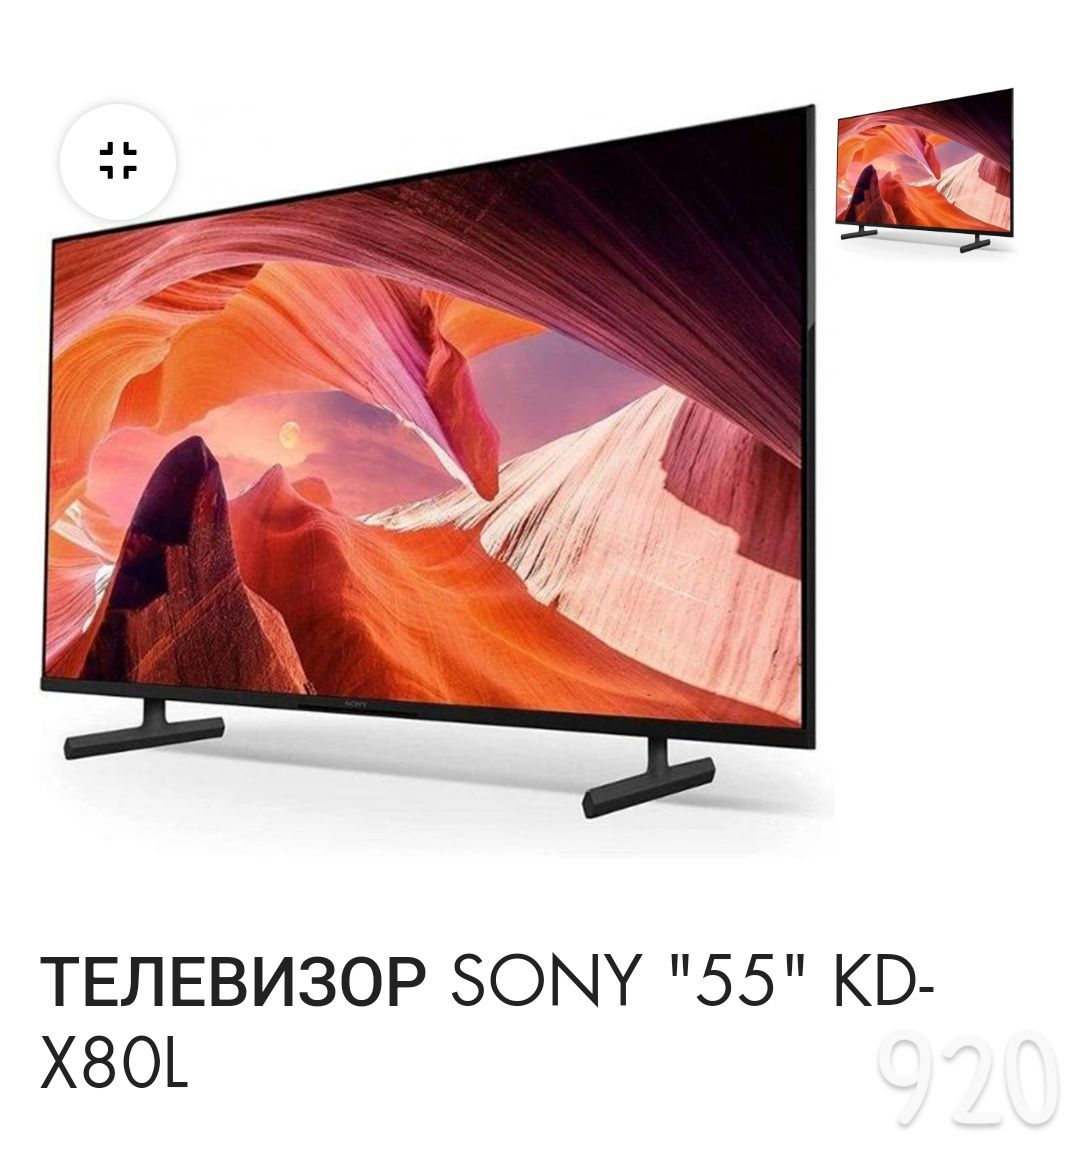 Телевизор SONY "55" KD - X80L